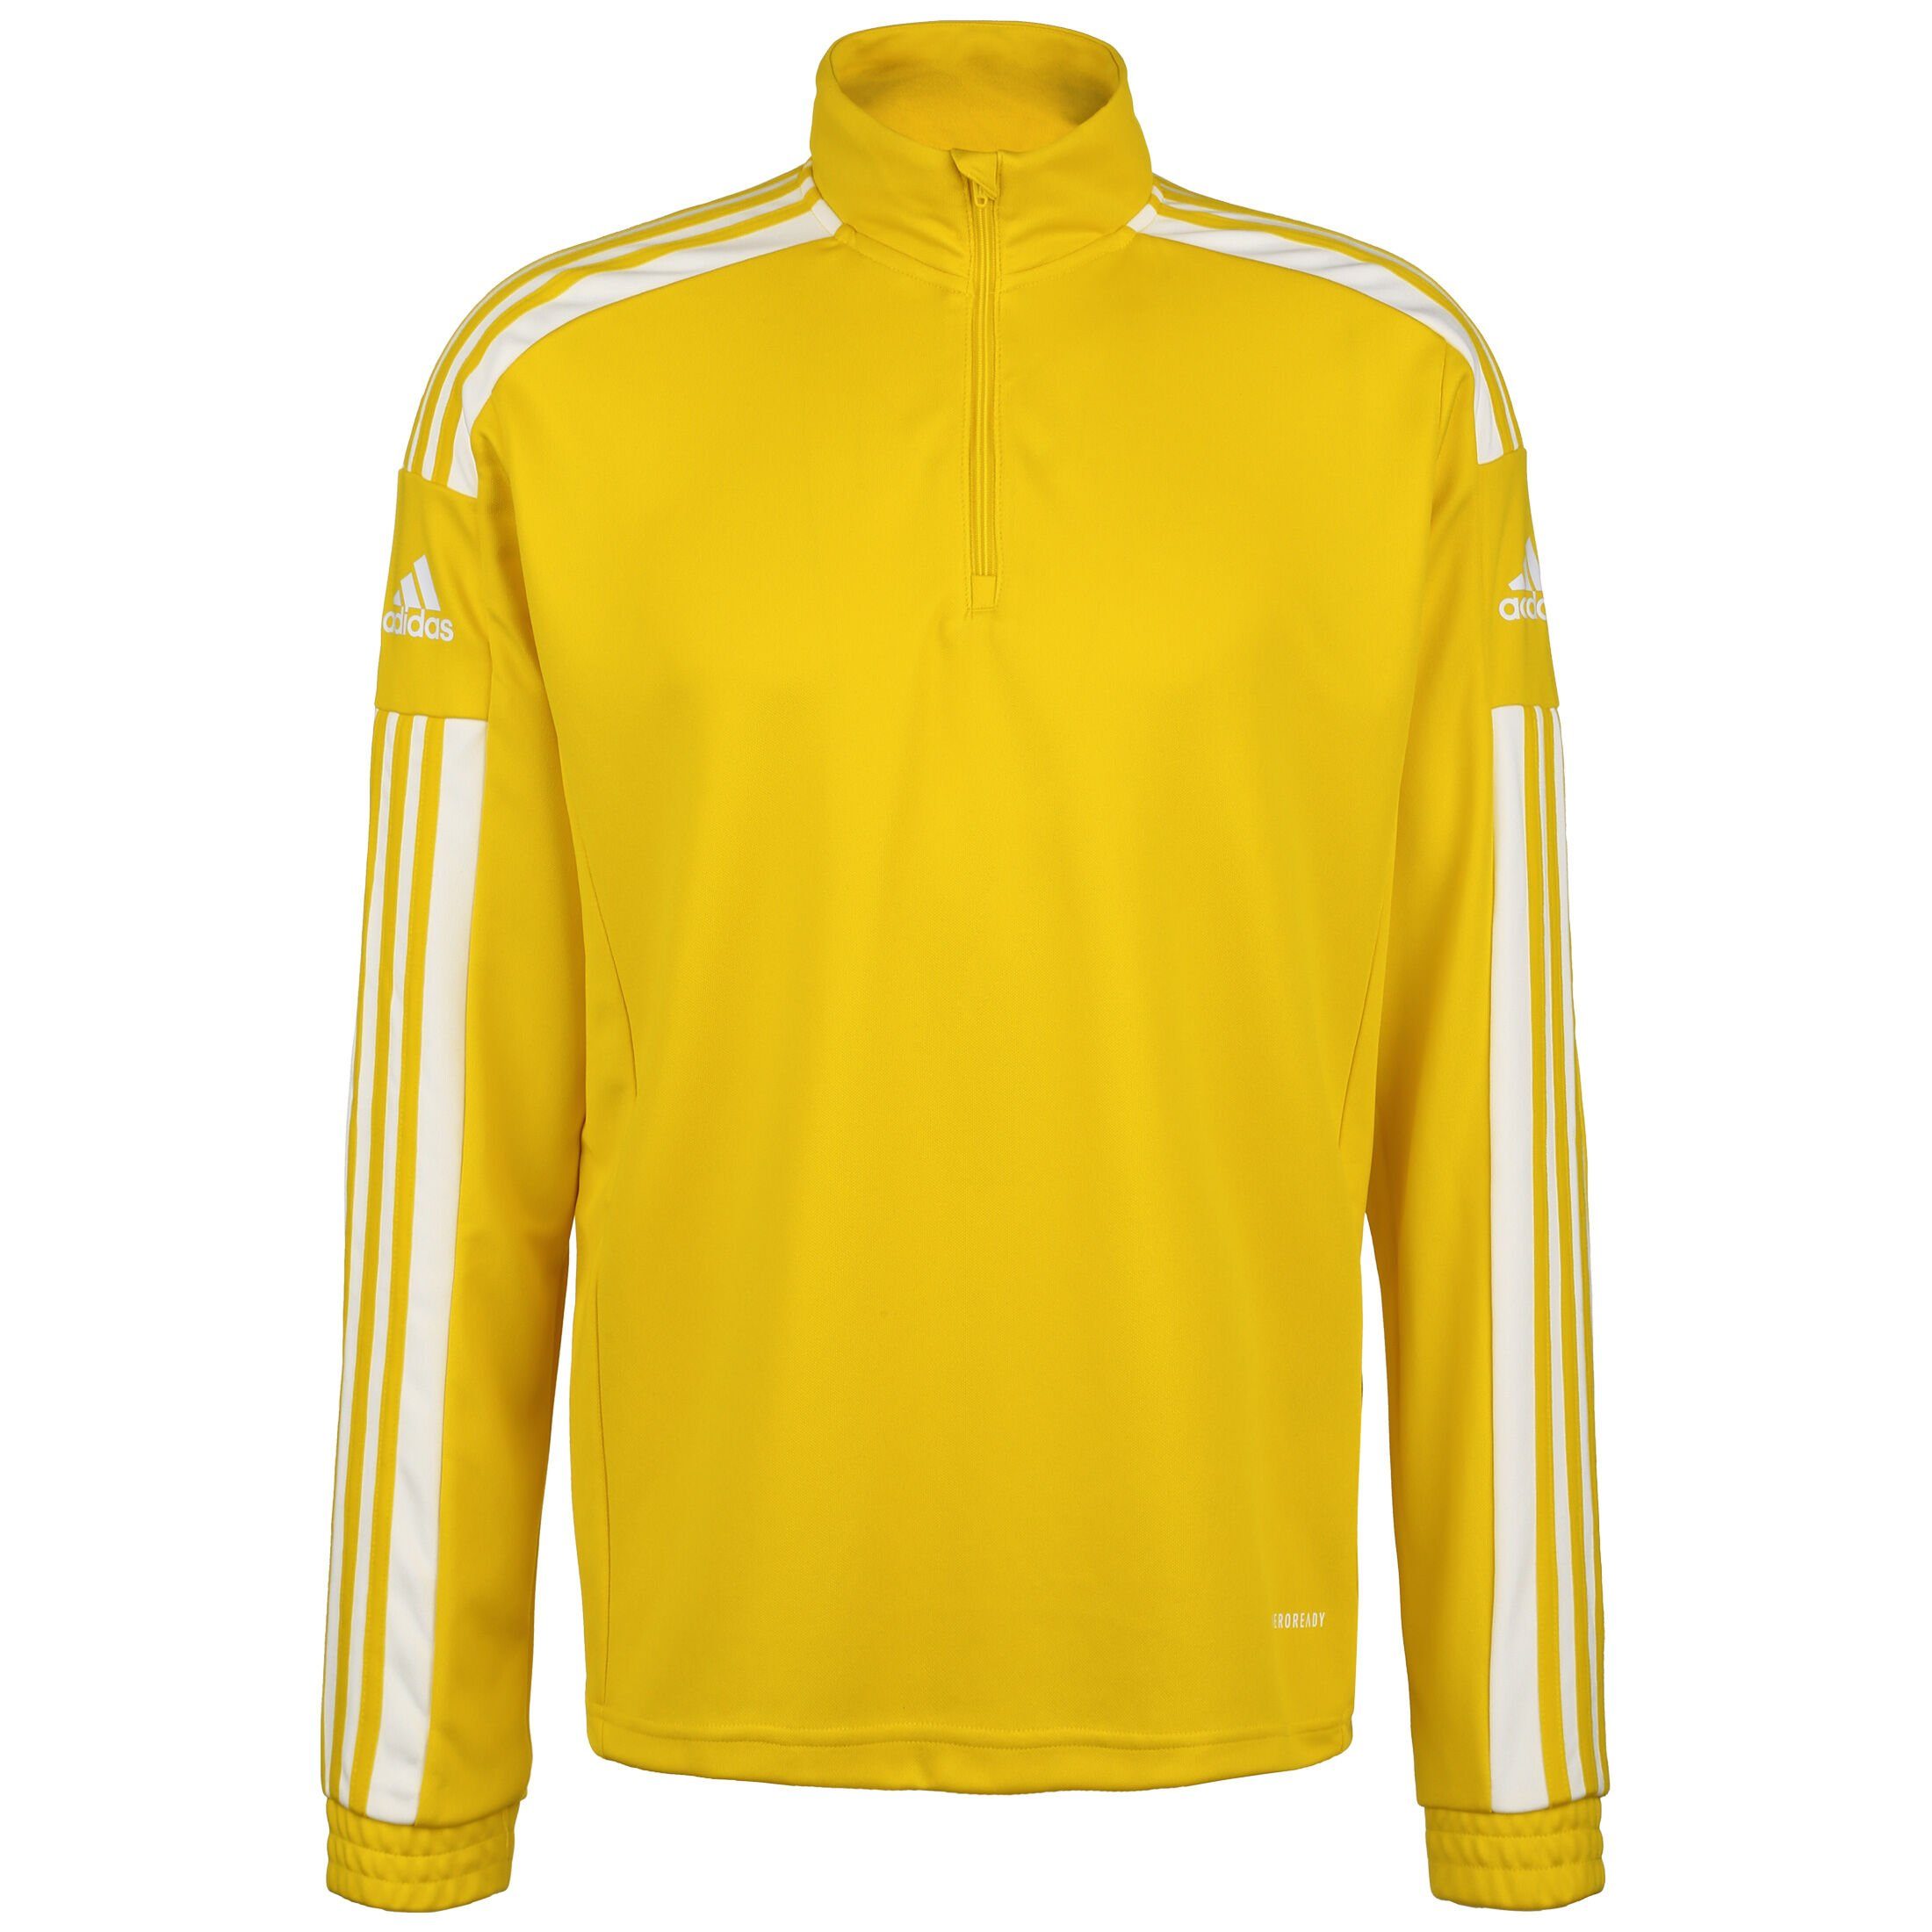 Trainingssweat Performance adidas Sweatshirt Herren gelb Squadra / weiß 21